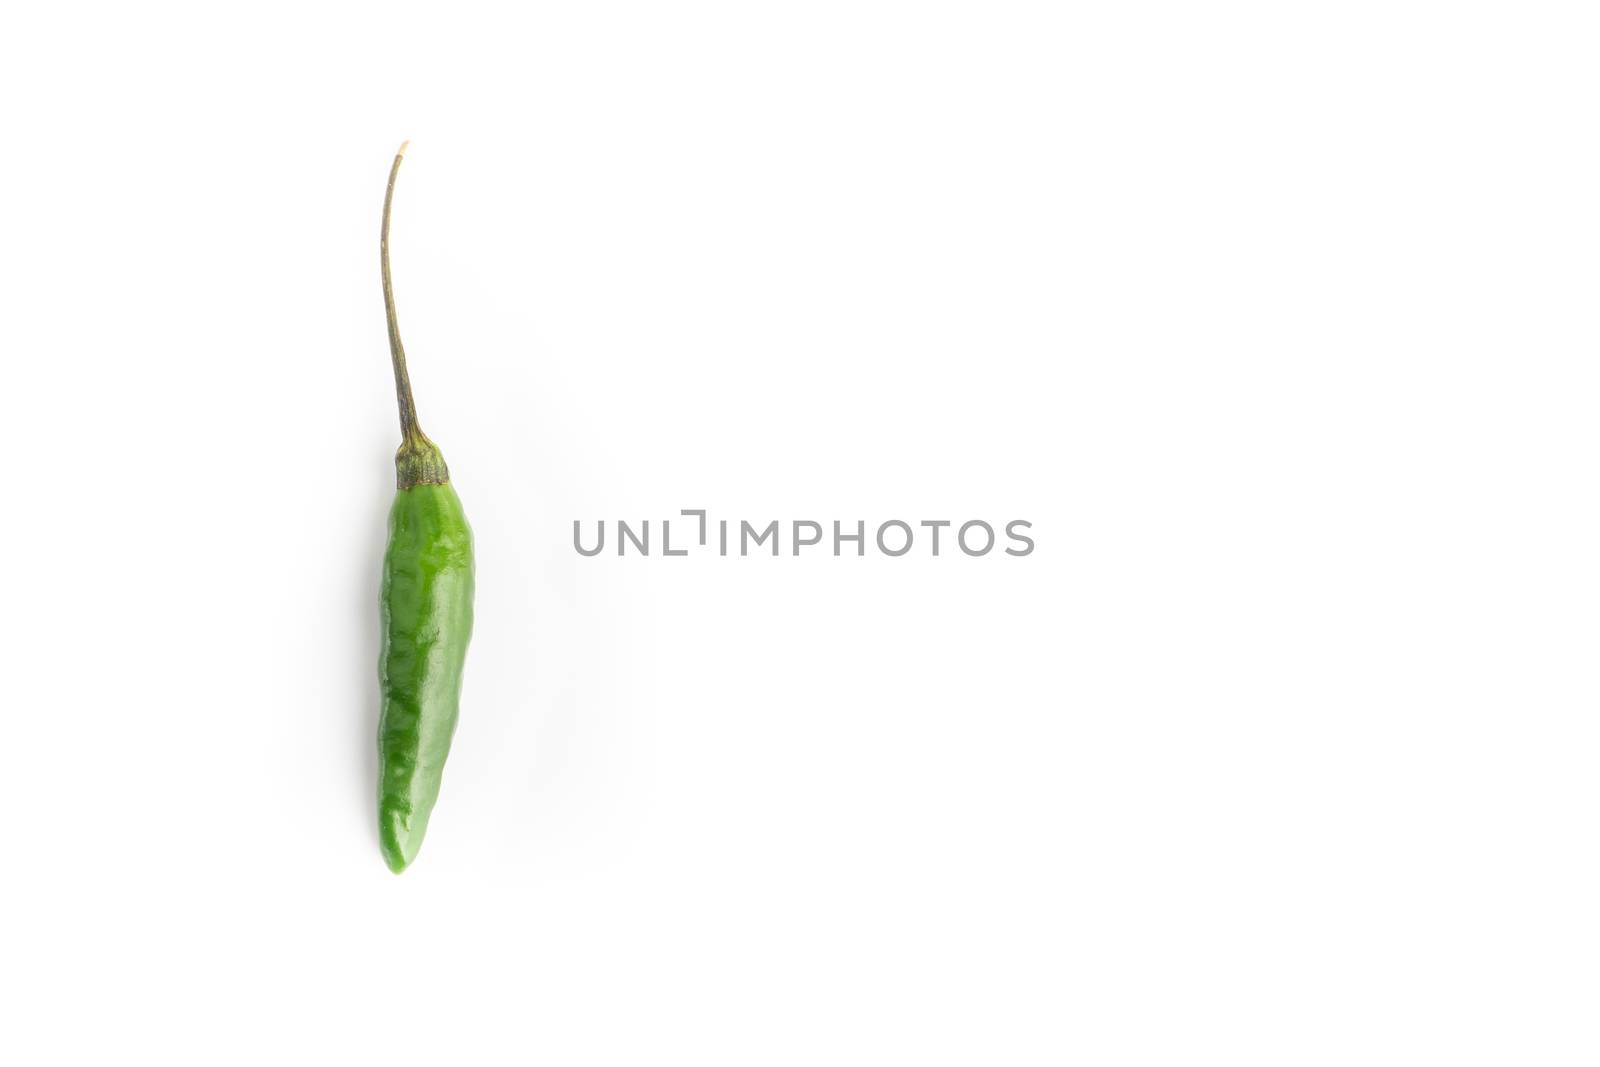 Green BirdÕs eye chili,Thai Chili pepper ,bird chili pepper nature isolate on white background. Selective focus and crop fragment